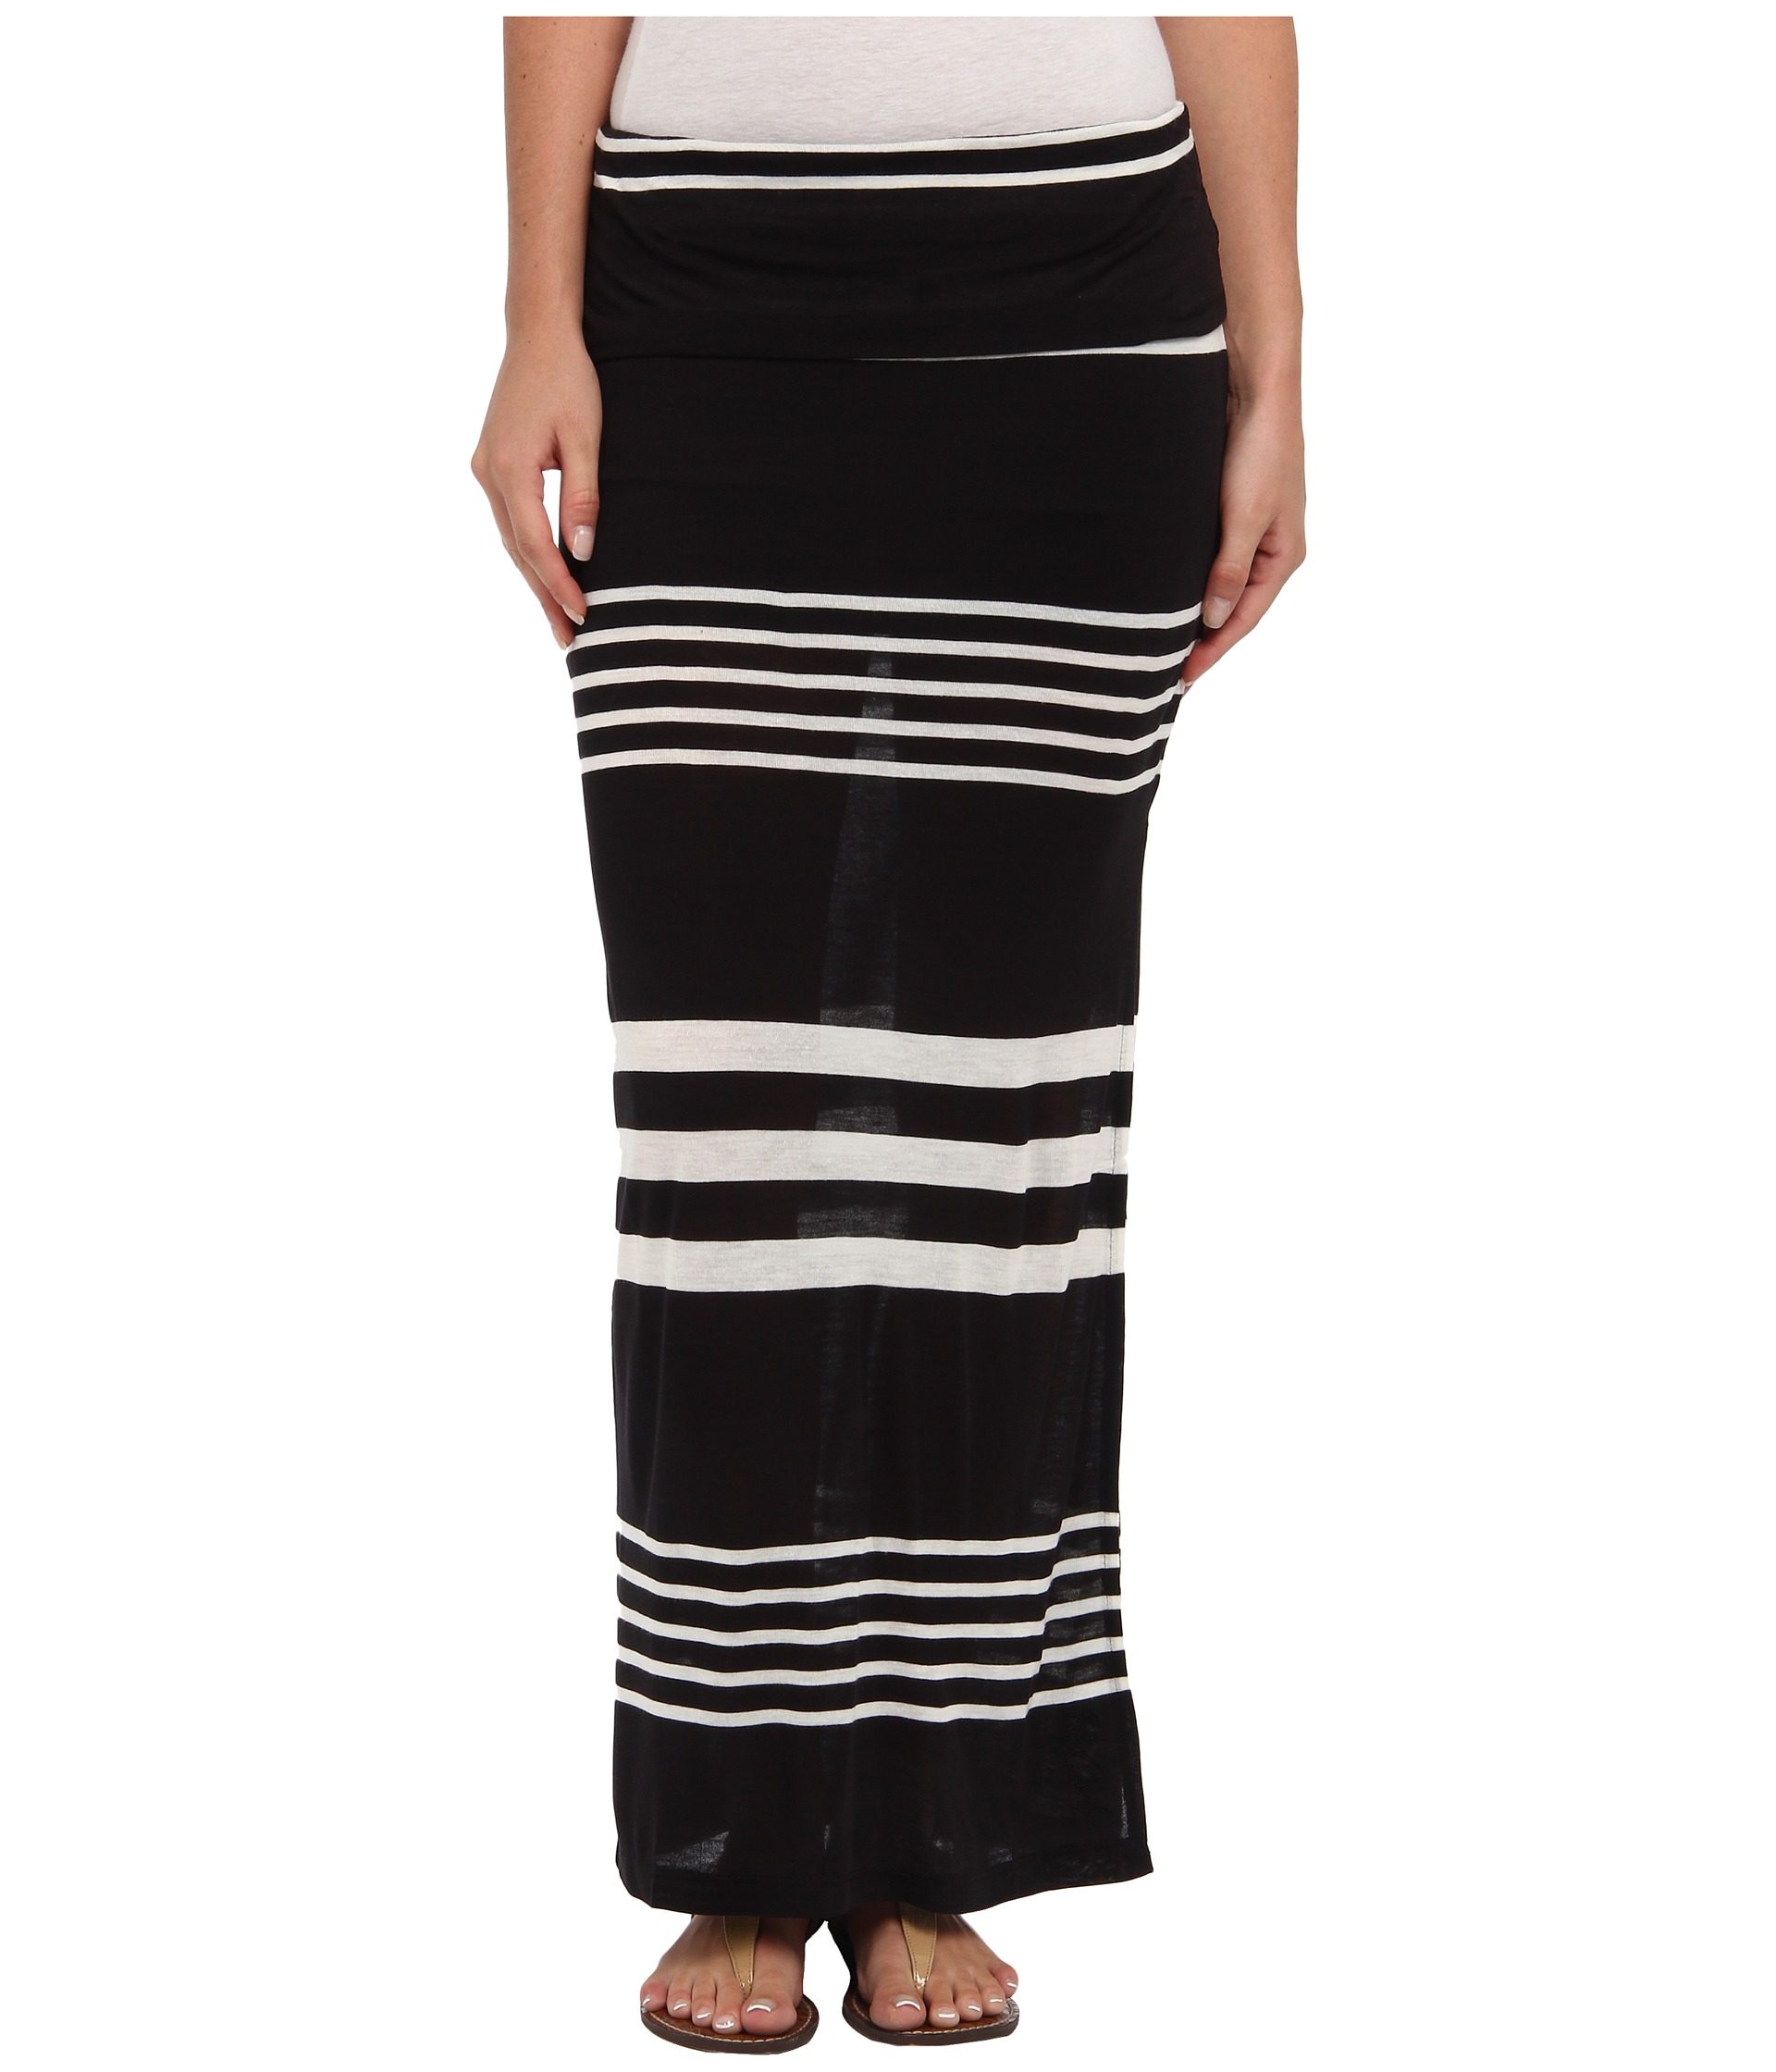 Rip curl Sunset Stripe Maxi Skirt in Black | Lyst